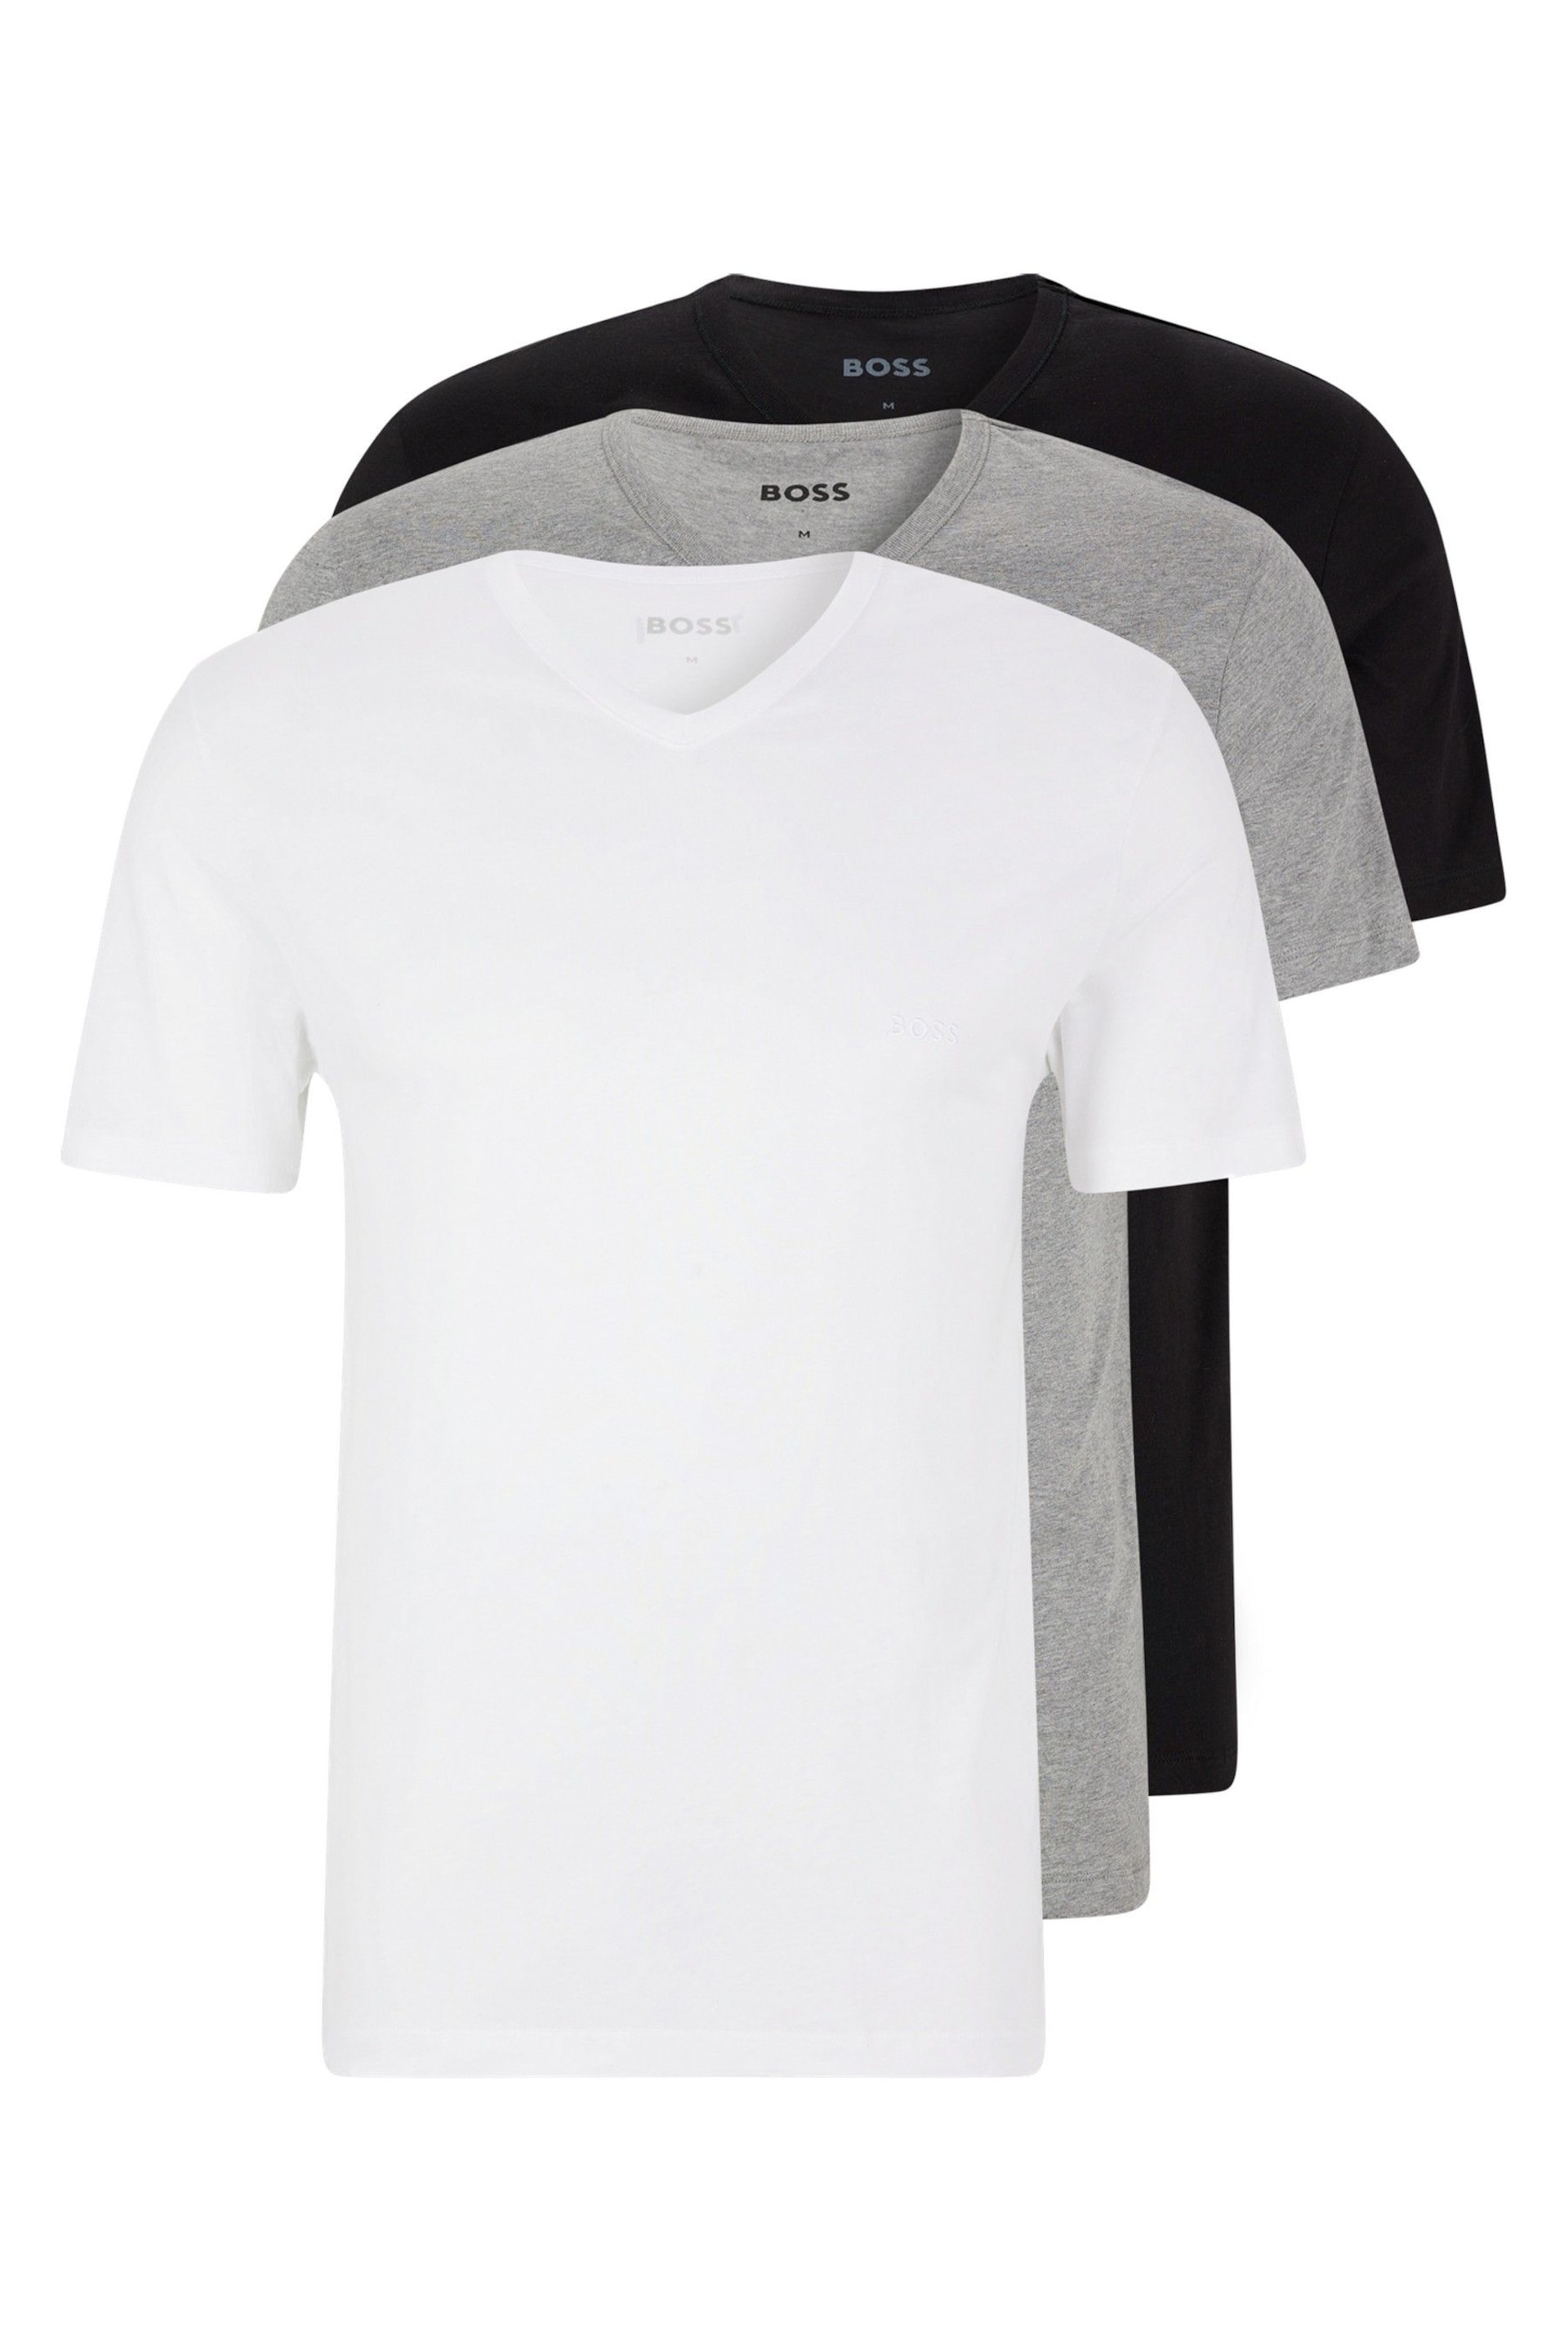 BOSS Black Classic V-Neck T-Shirts 3 Pack - Image 2 of 9